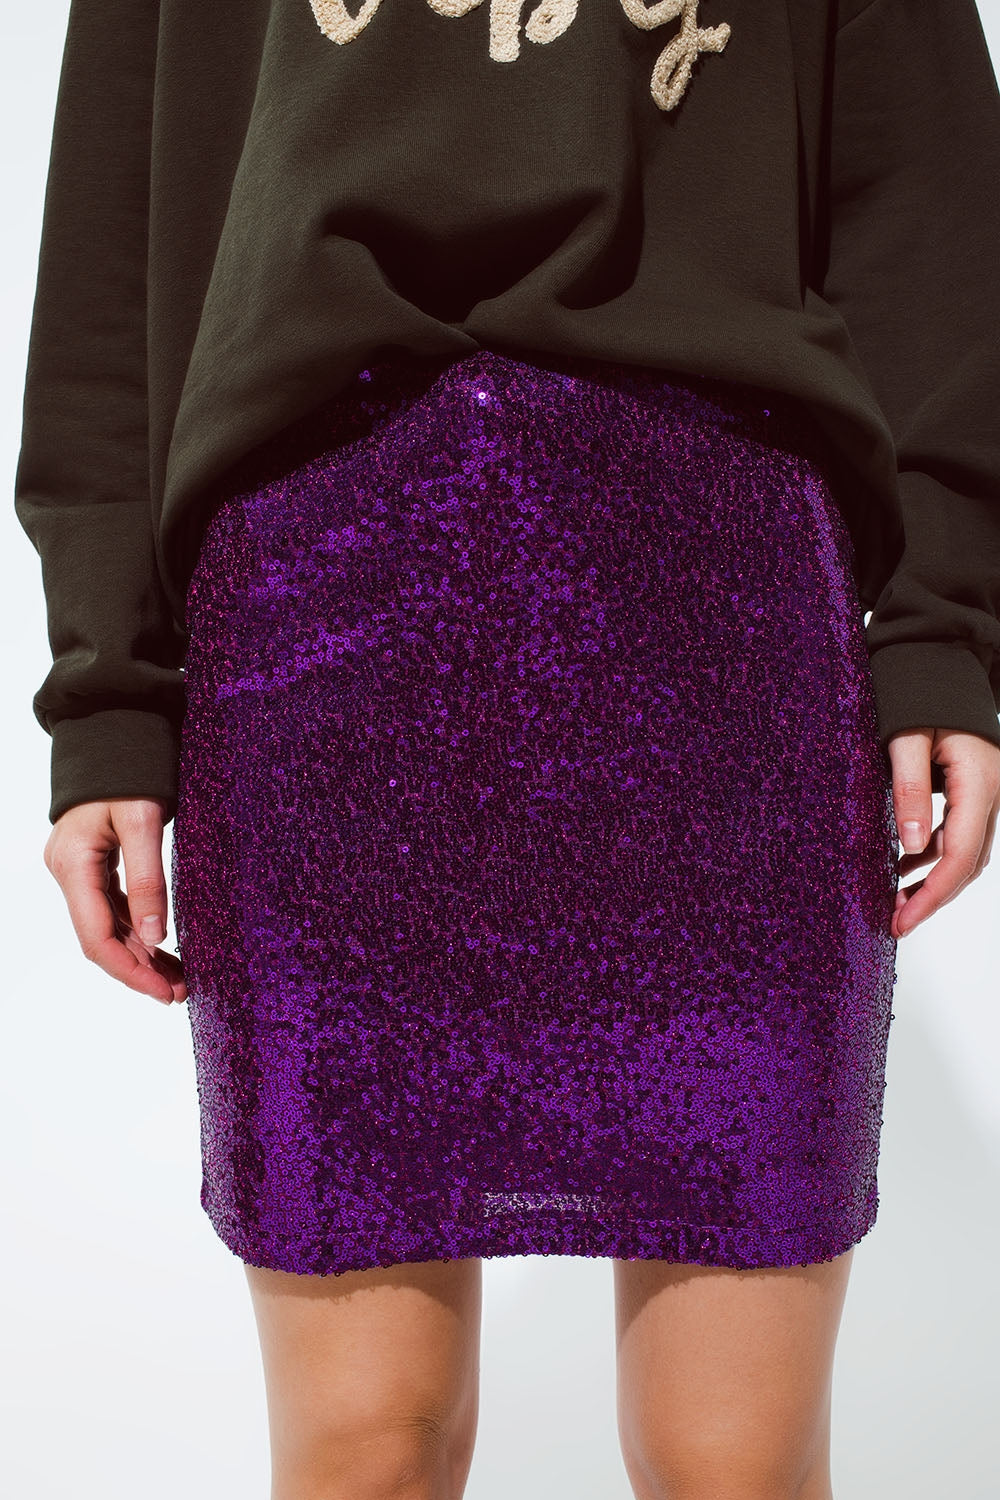 Sequin mini skirt in purple color